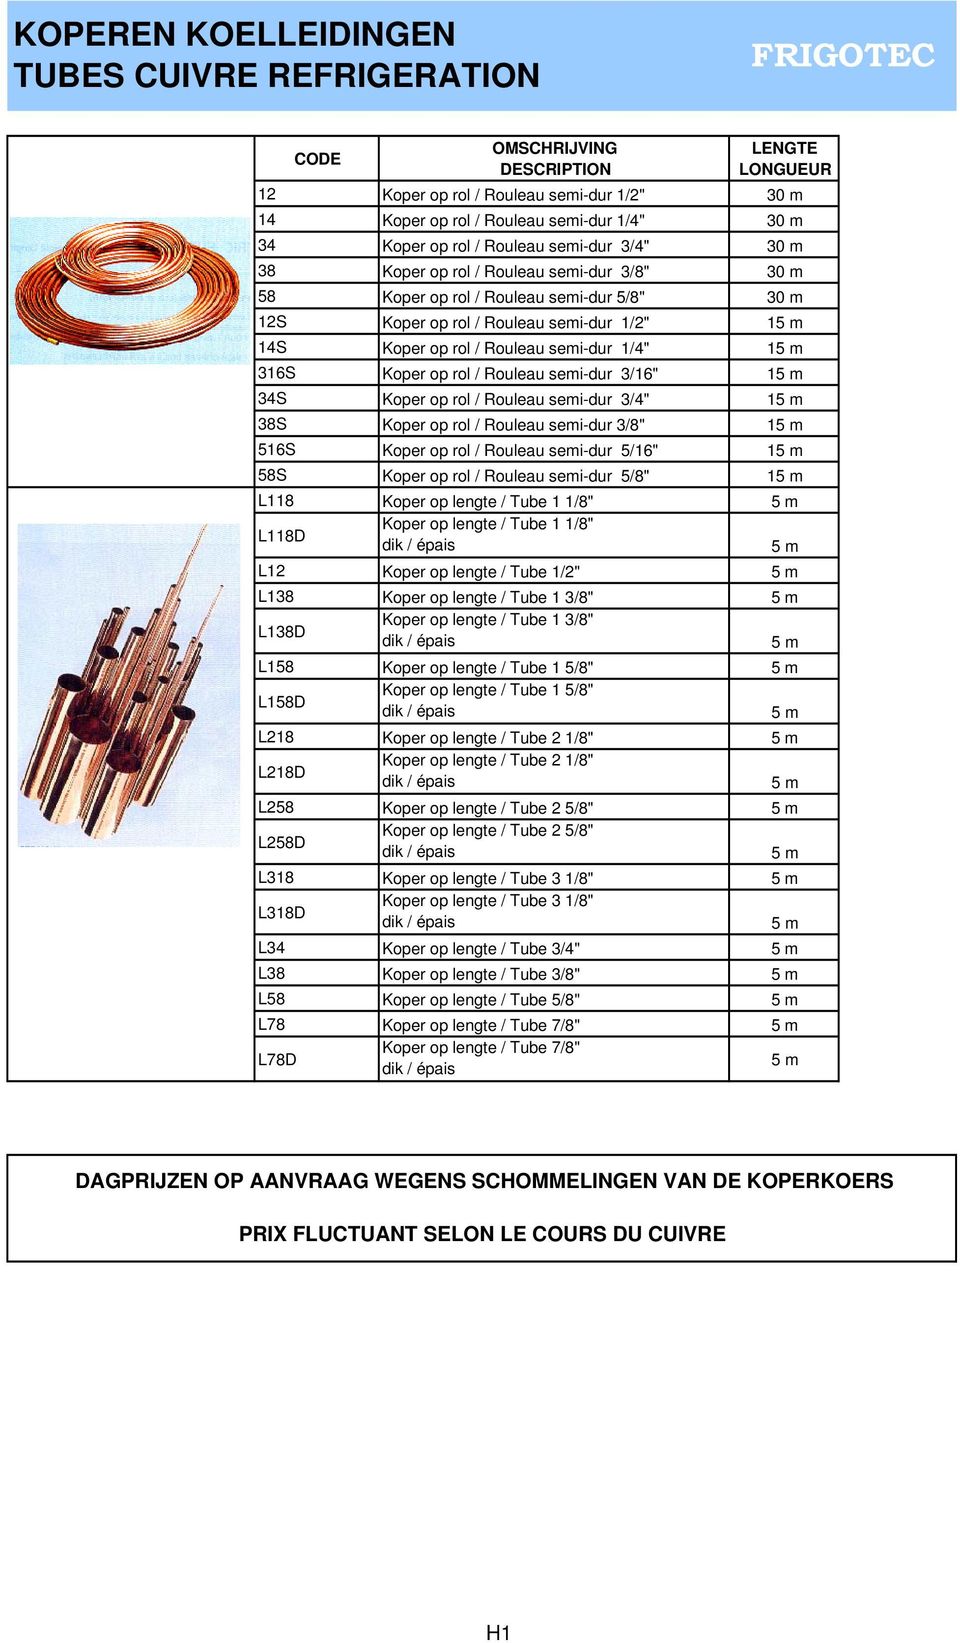 KOELLEIDINGEN EN ISOLATIE TUBES CUIVRE REFRIGERATION ET ISOLATION - PDF  Free Download